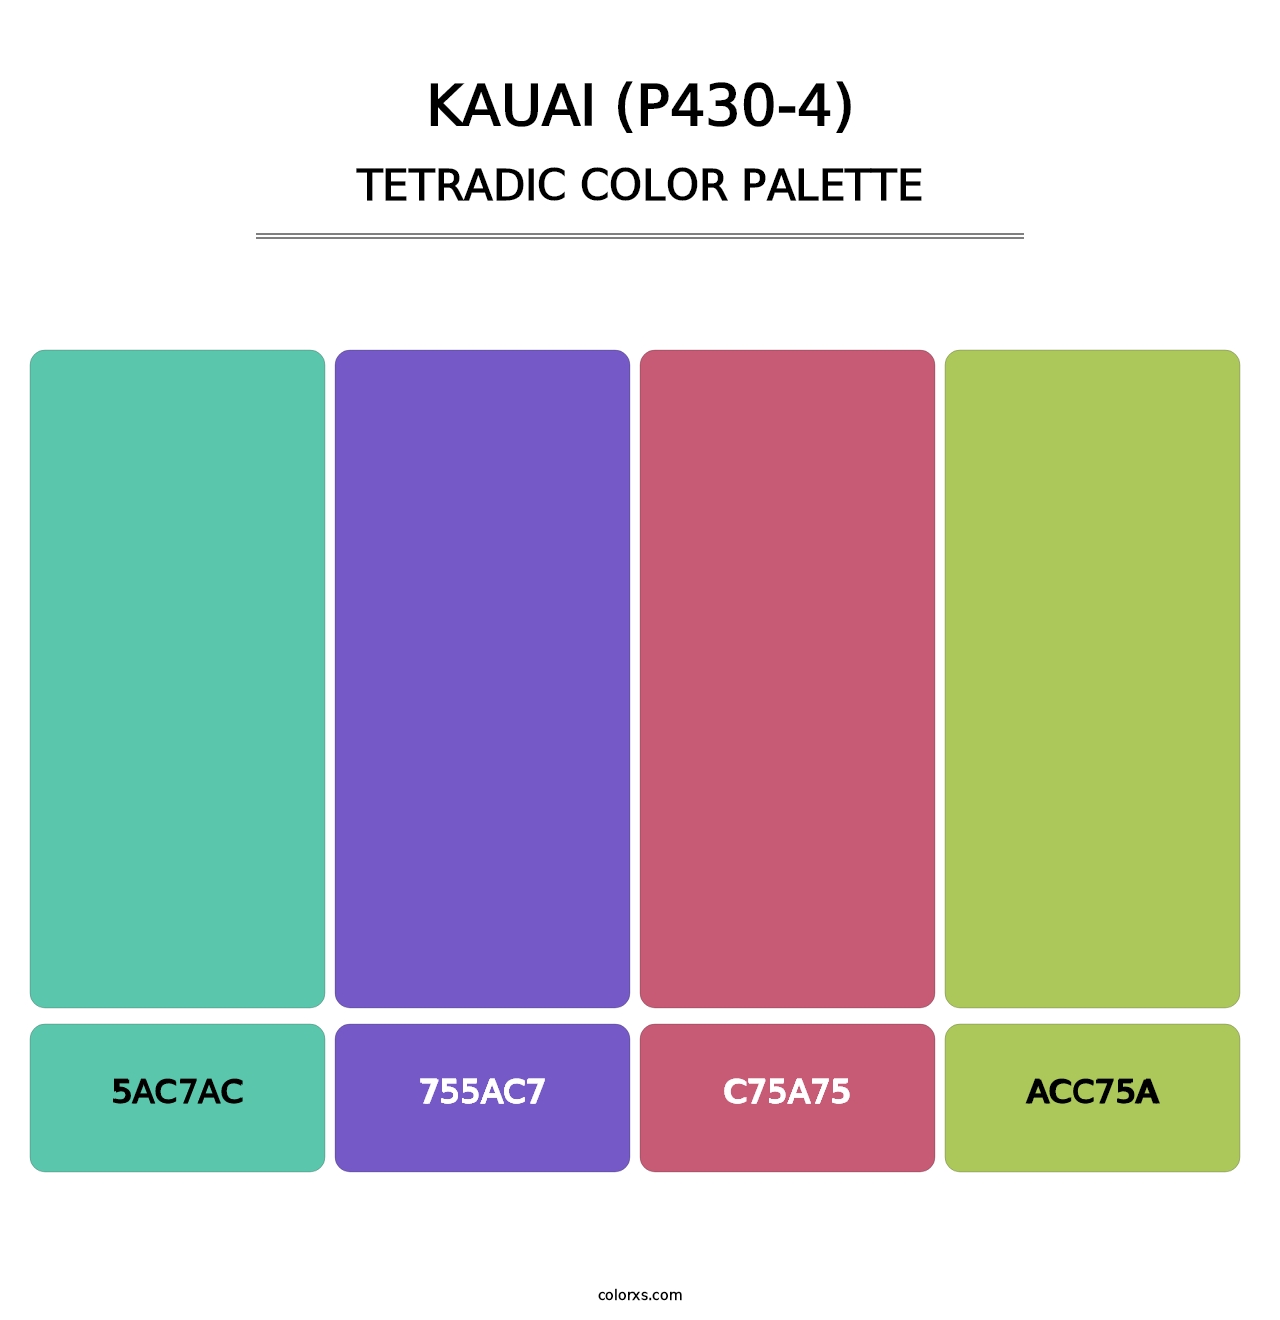 Kauai (P430-4) - Tetradic Color Palette